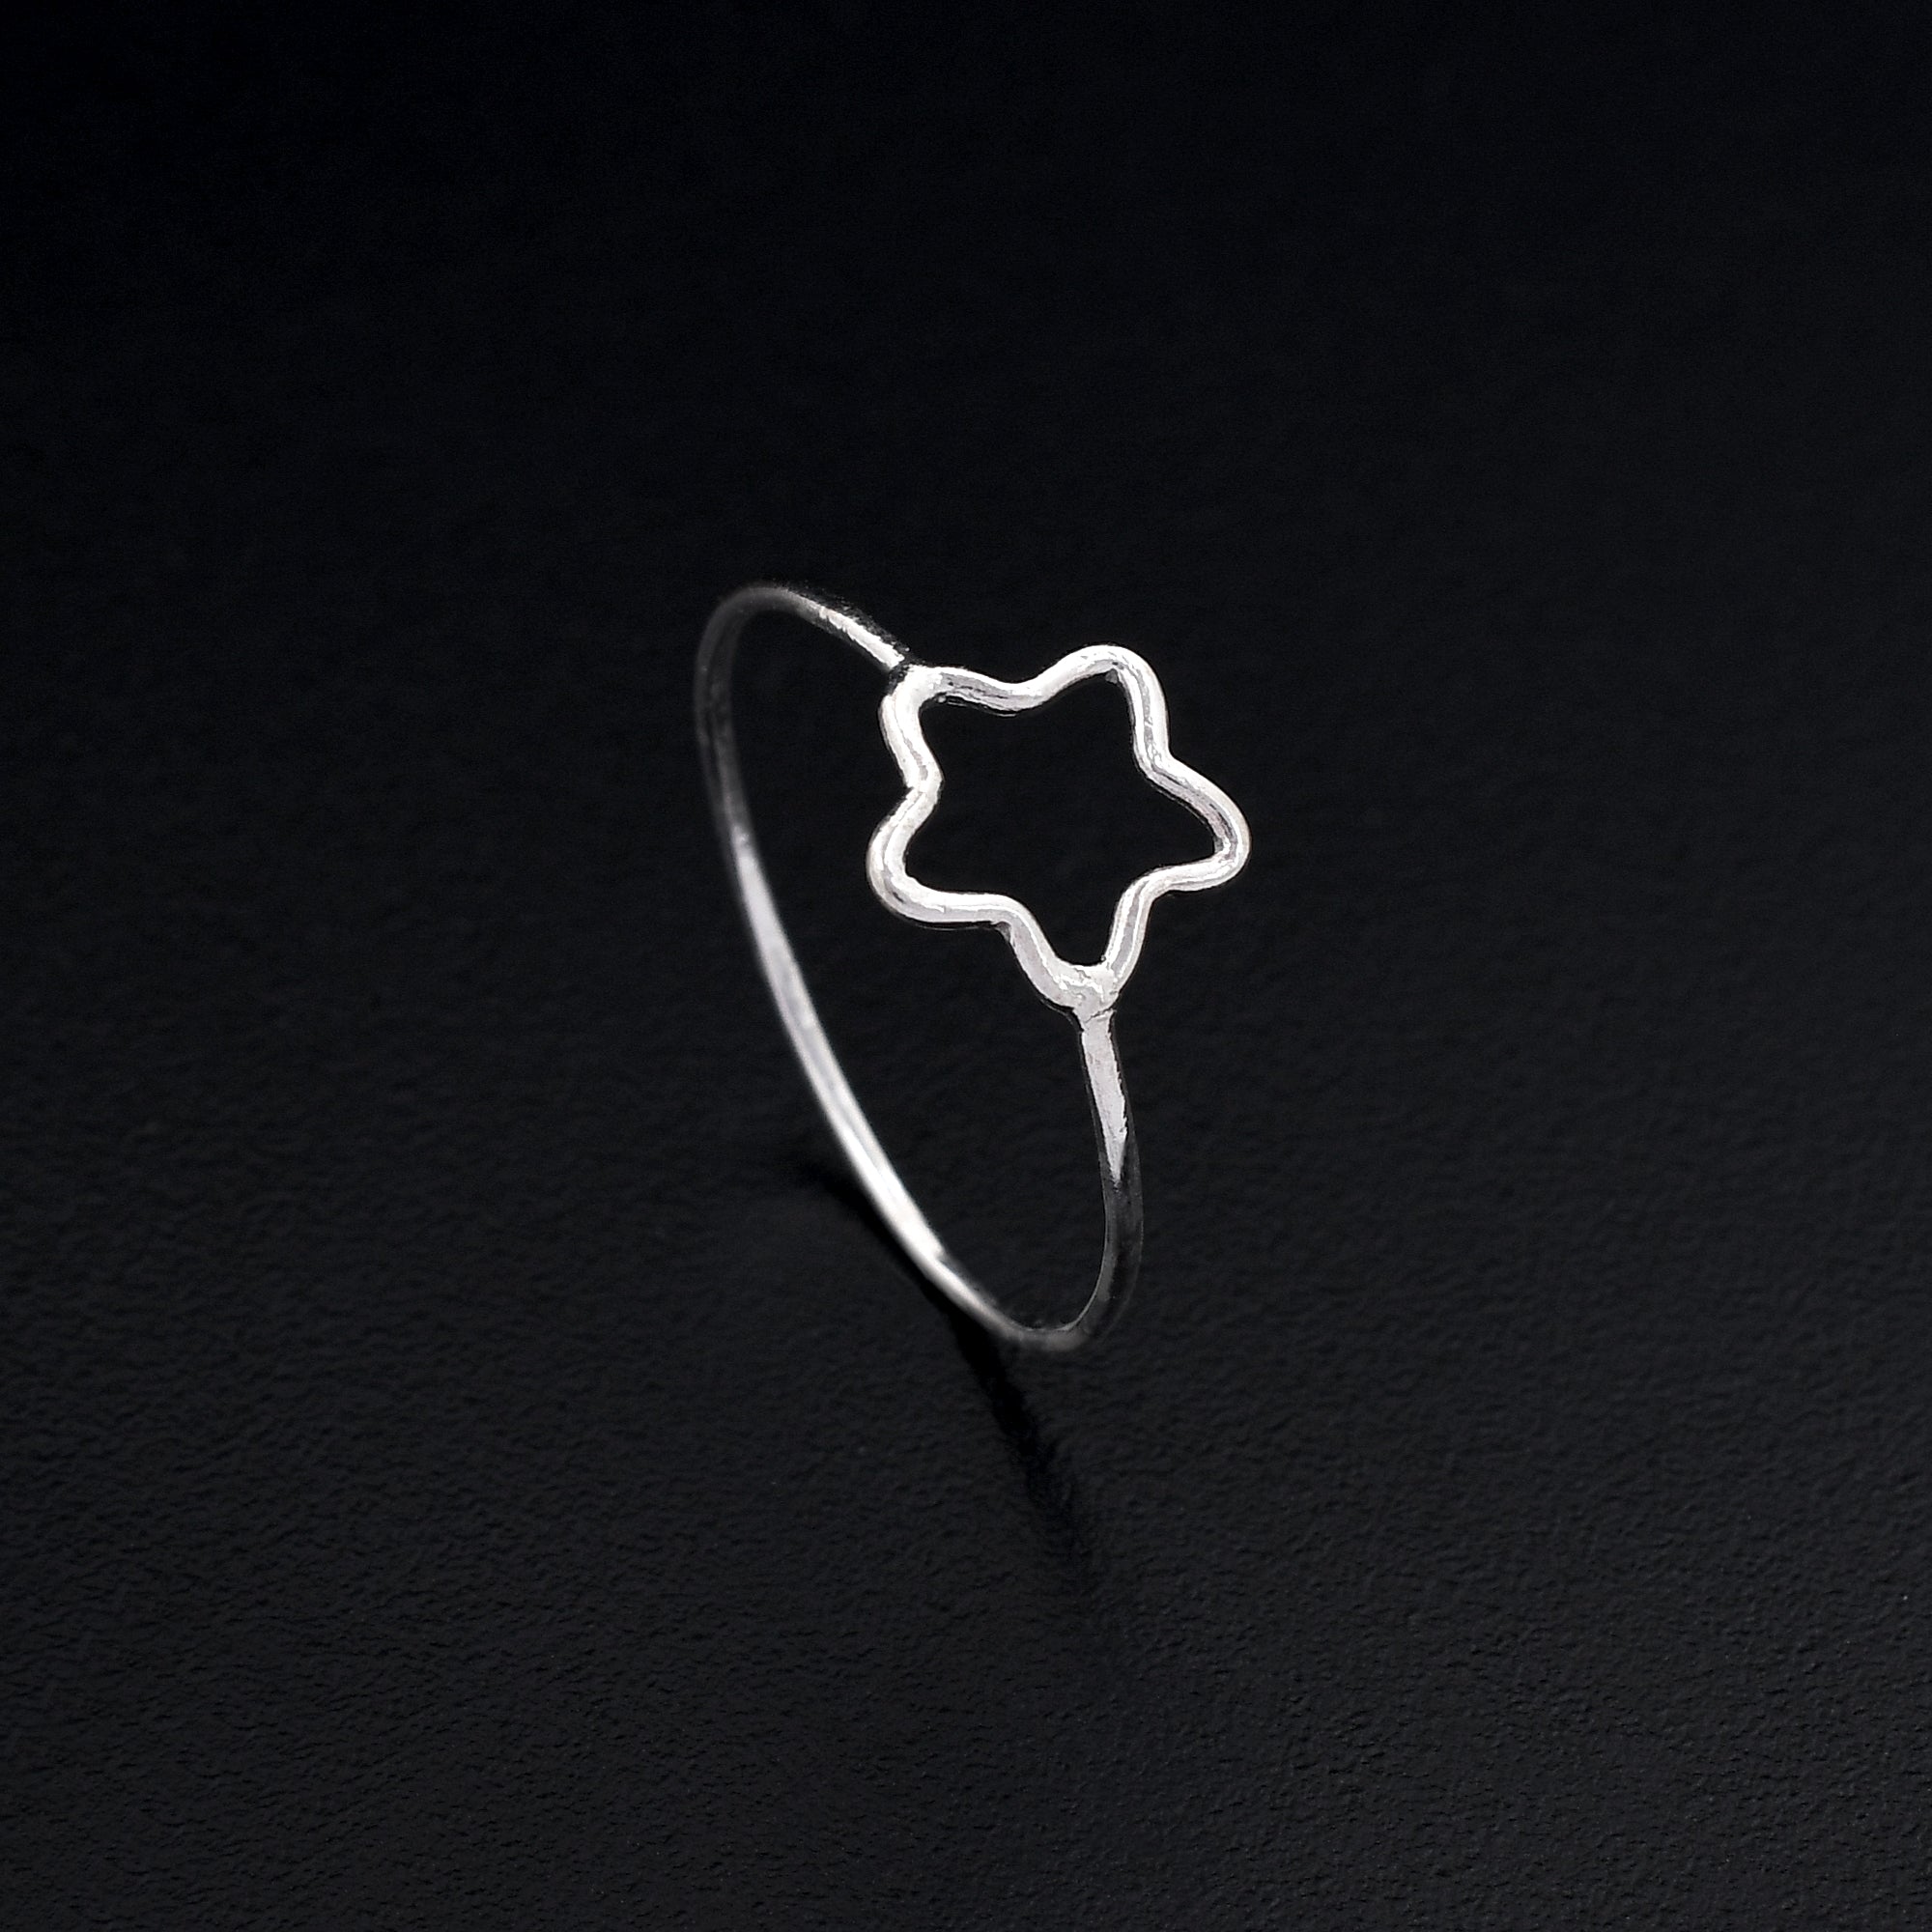 Dynamic Star Design 925 Sterling Silver Ring